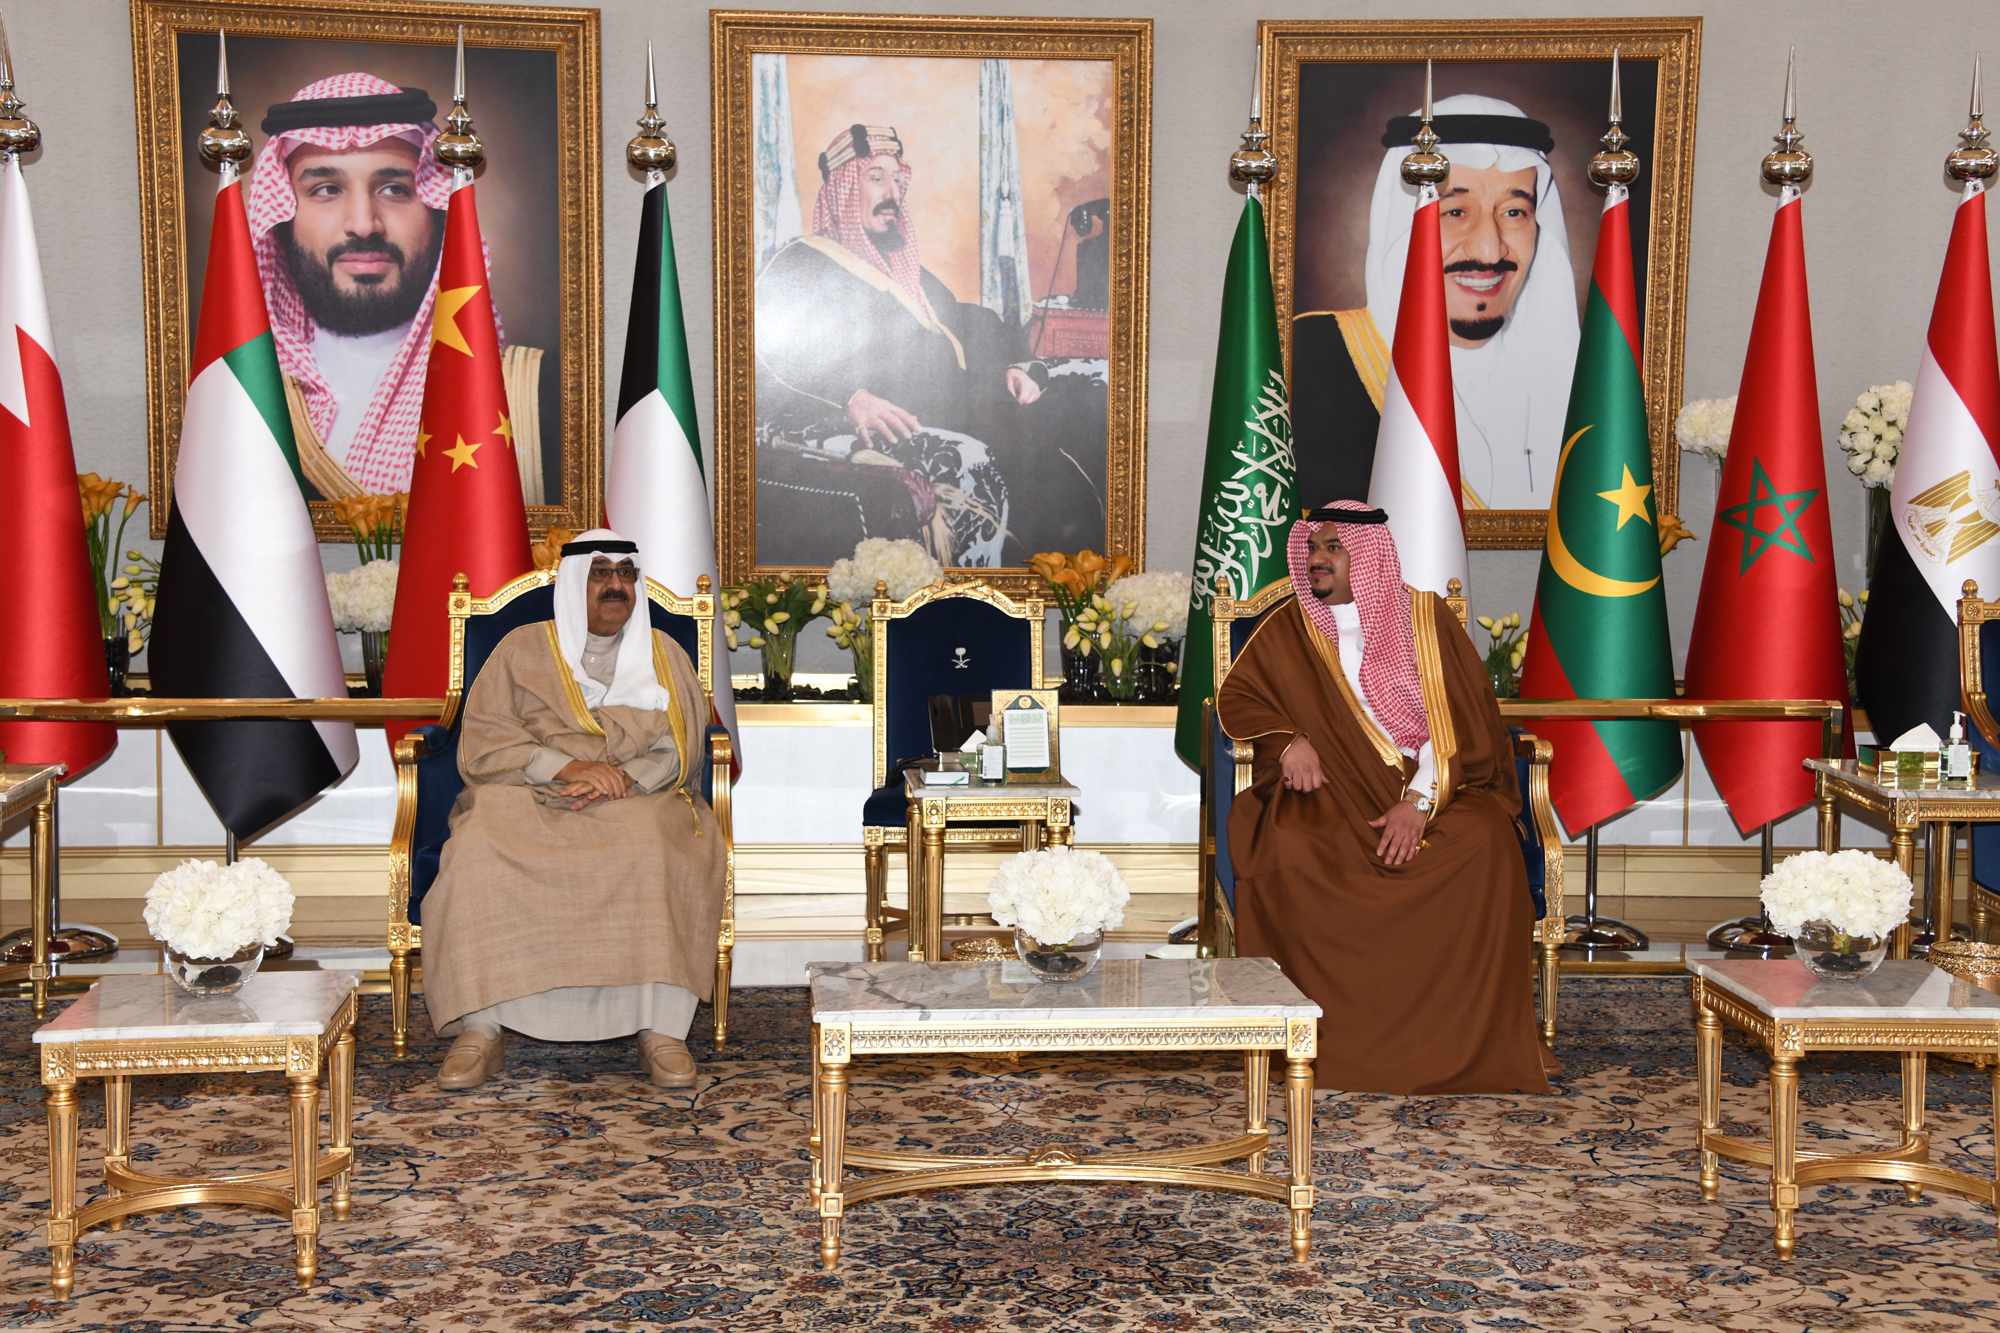 Representative of His Highness the Amir Sheikh Nawaf Al-Ahmad Al-Sabah, His Highness the Crown Prince arrives in Saudi Arabia